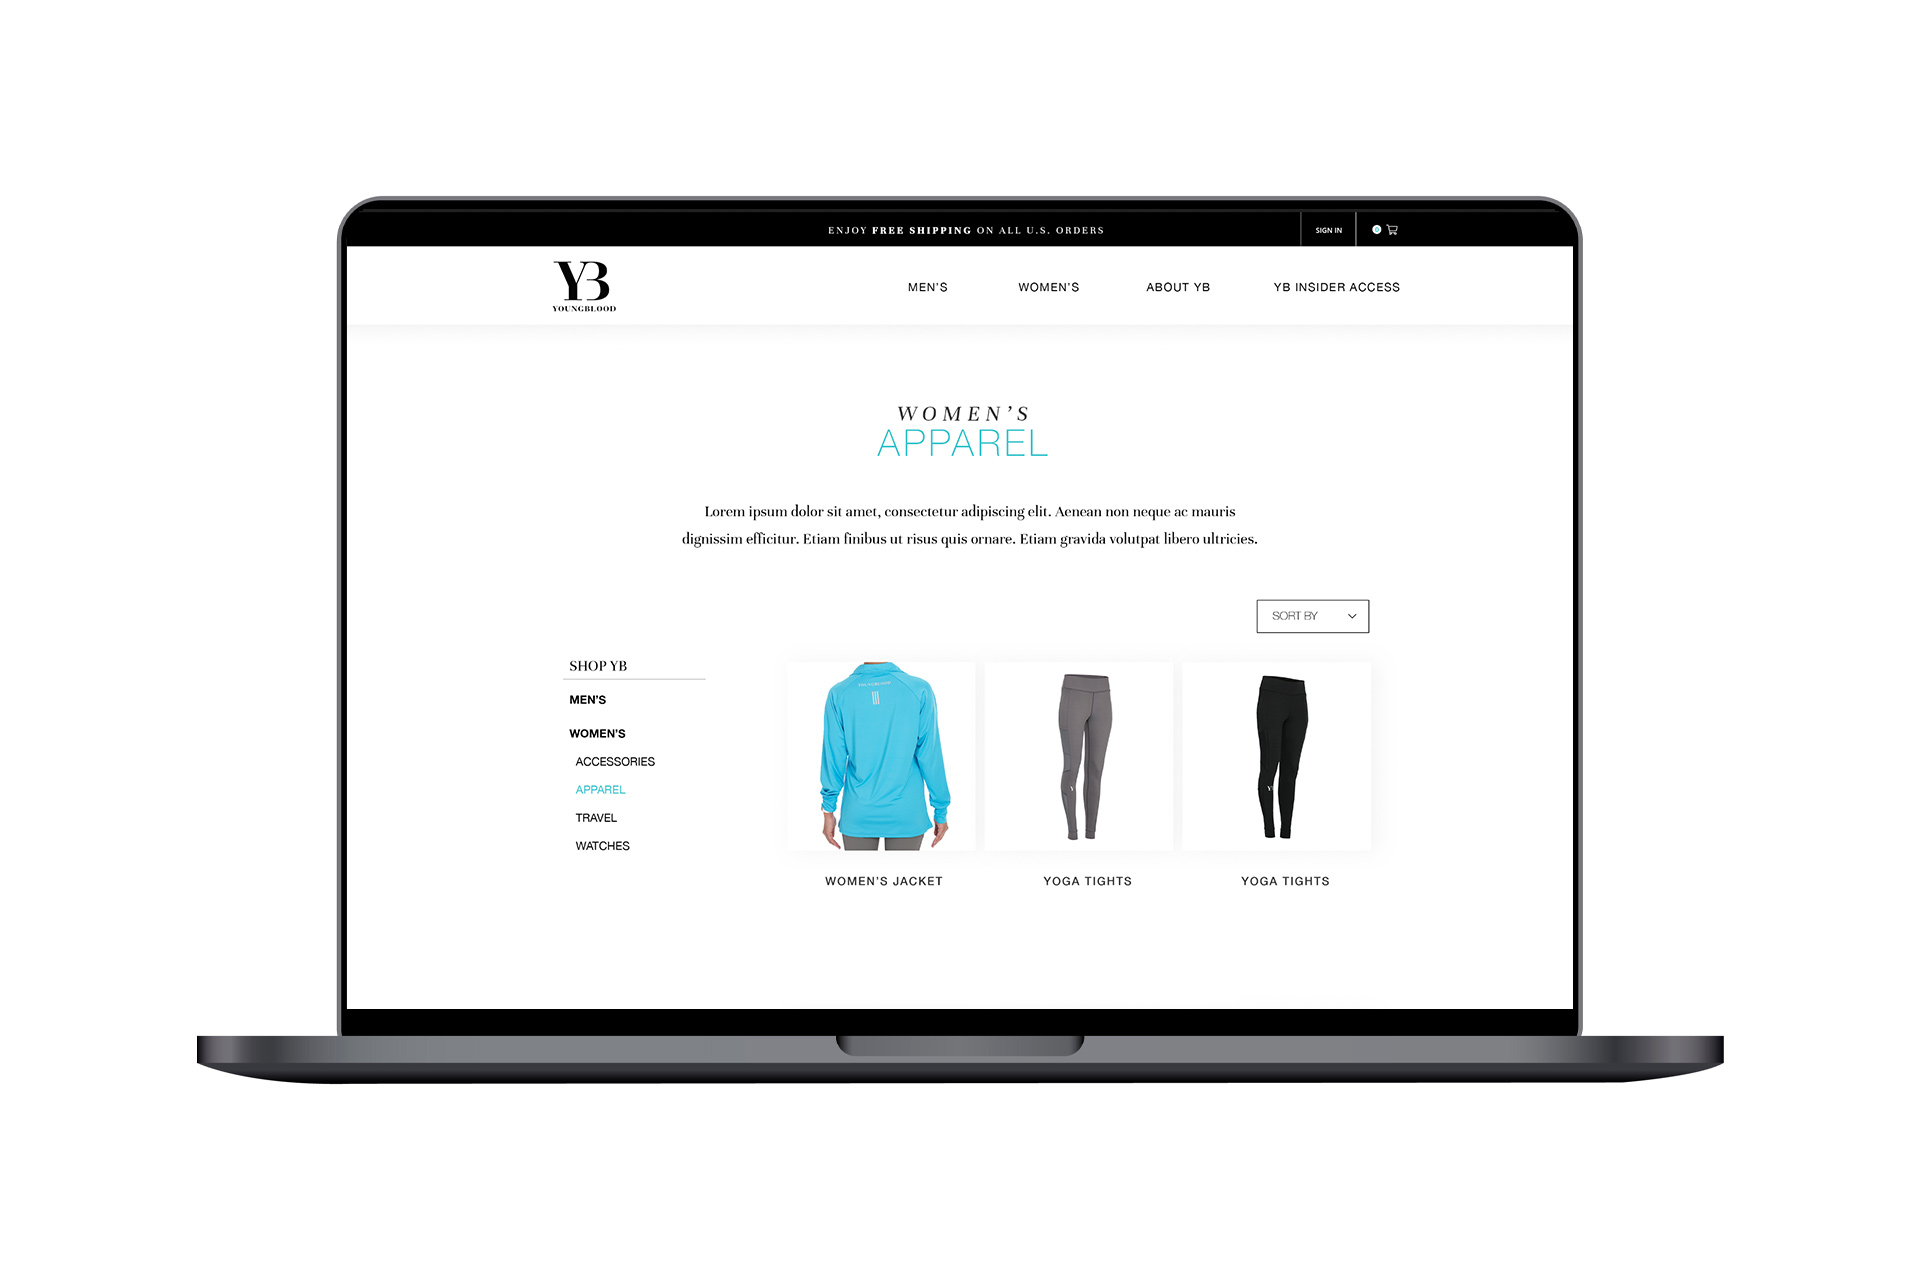 eCommerce website showcasing women's apparel.